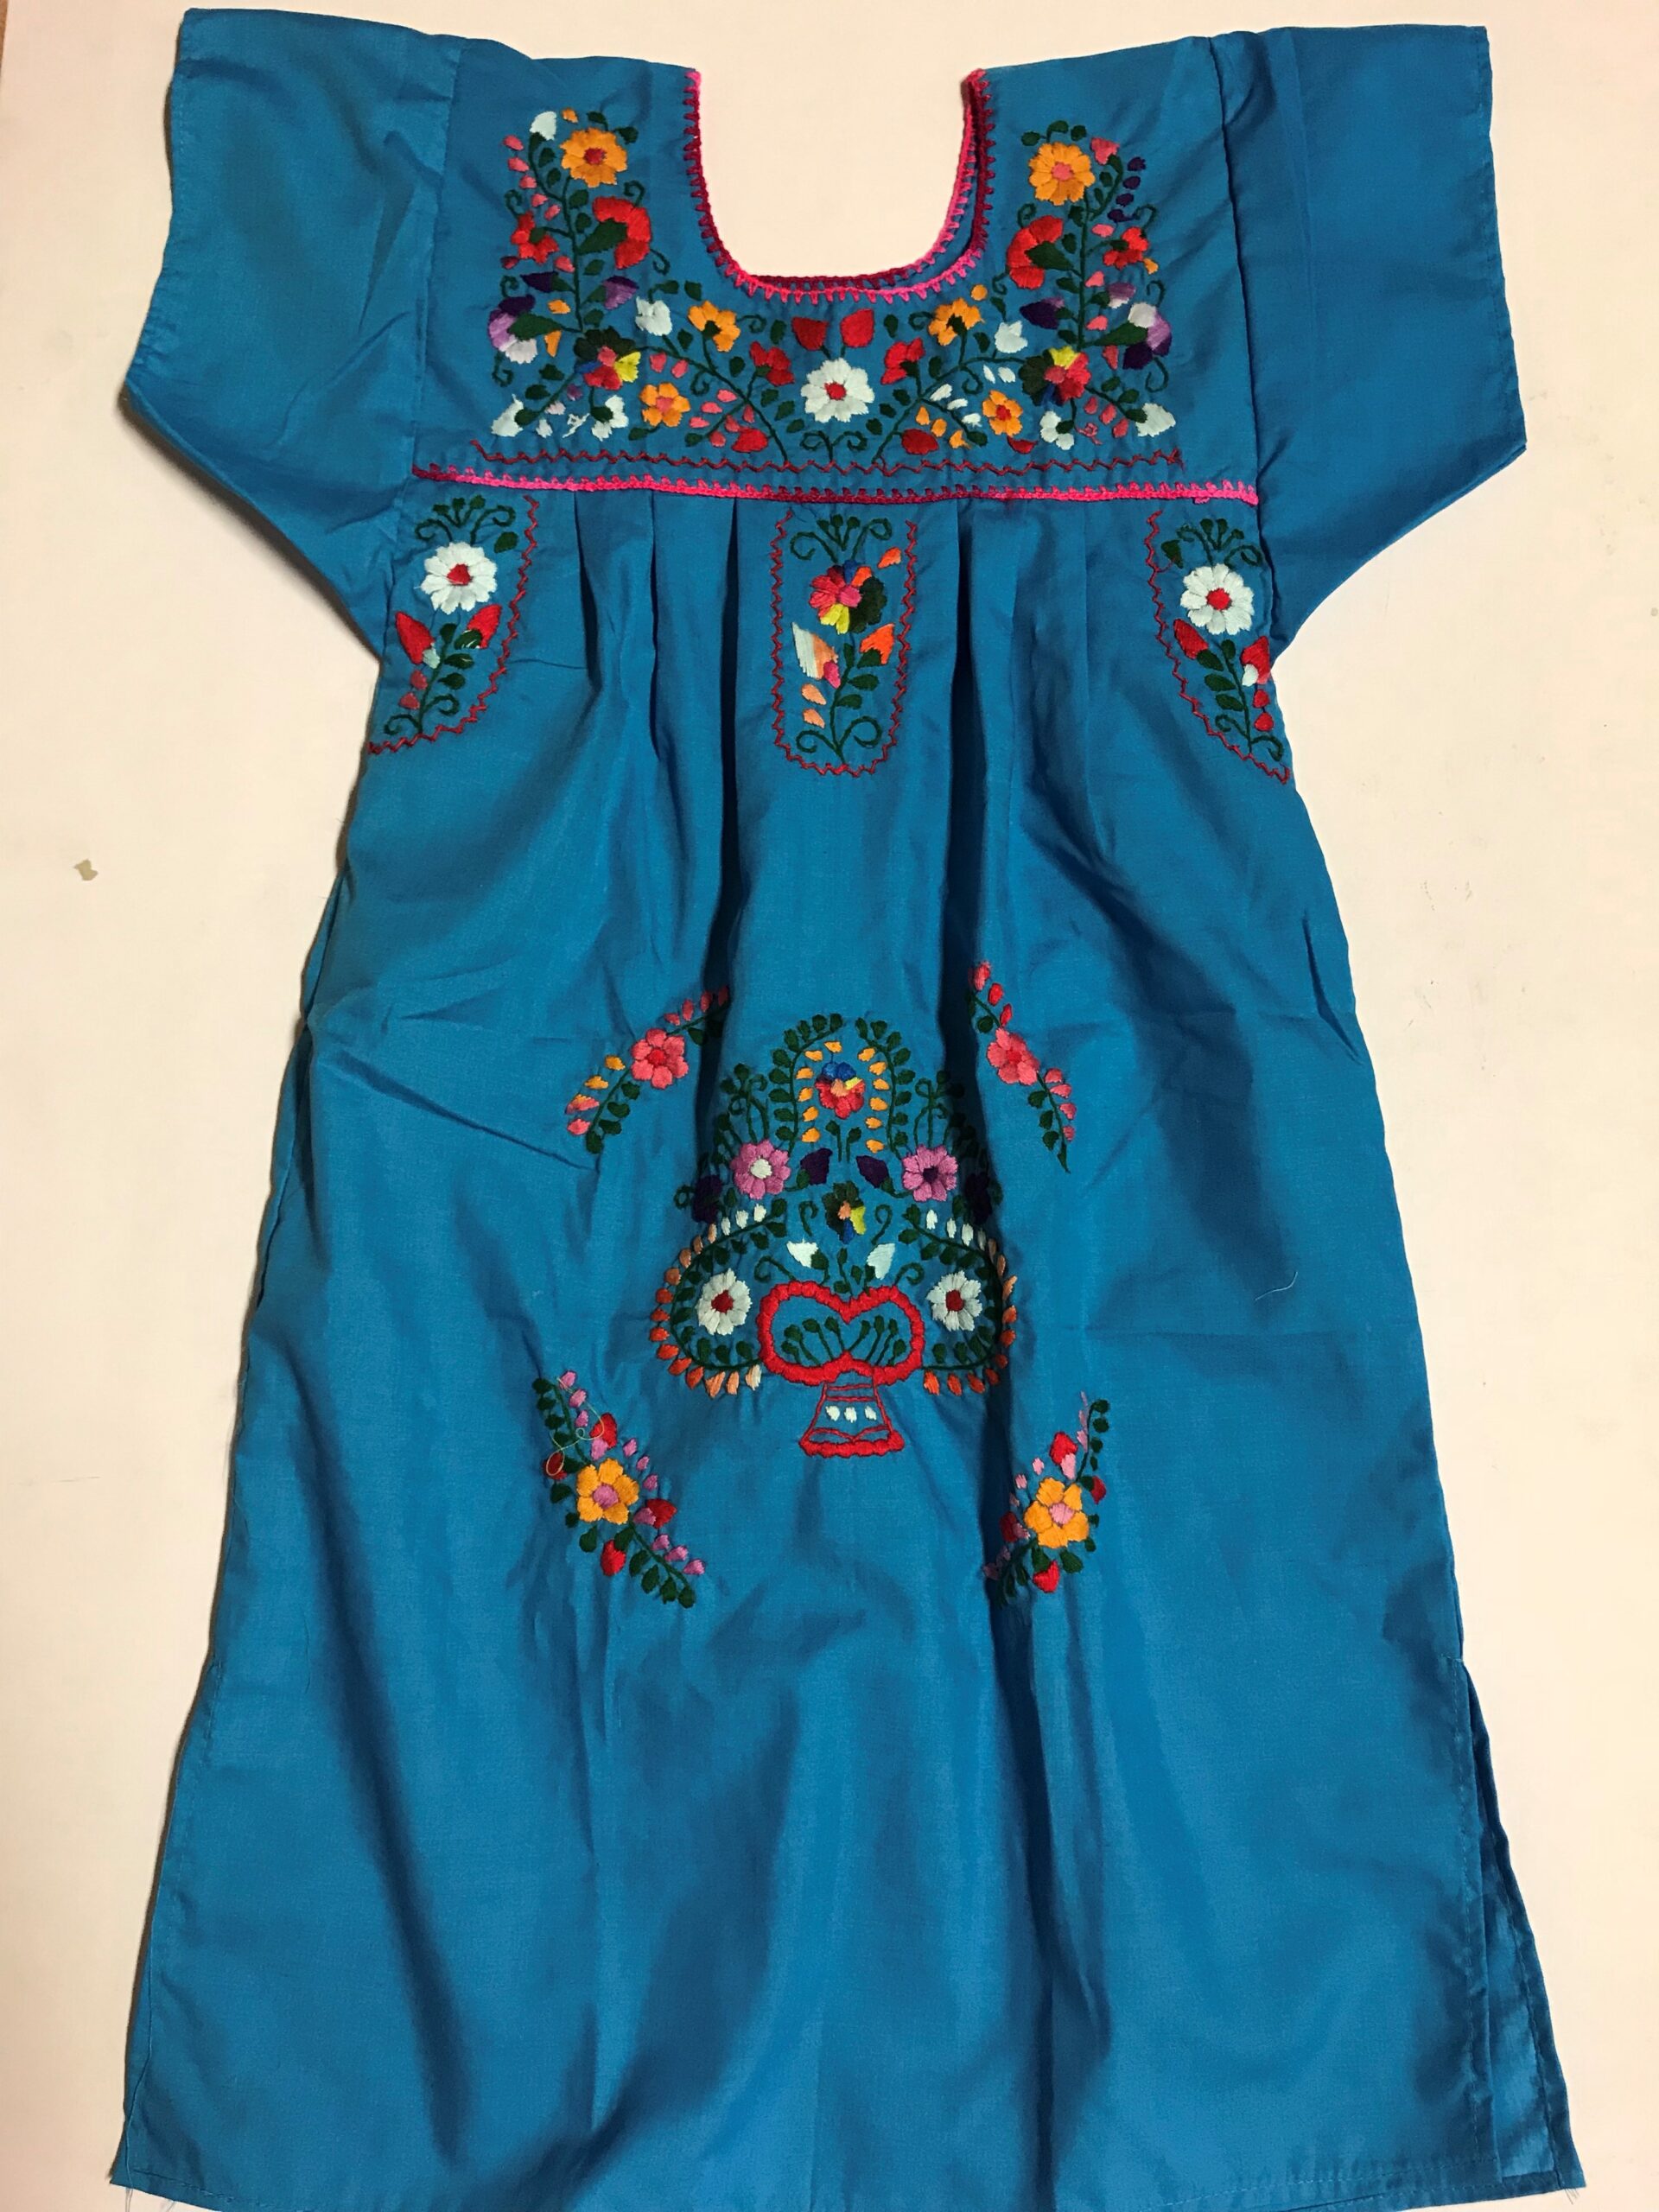 BLUE SIZE 6 GIRLS DRESS - Rustico Mexicano